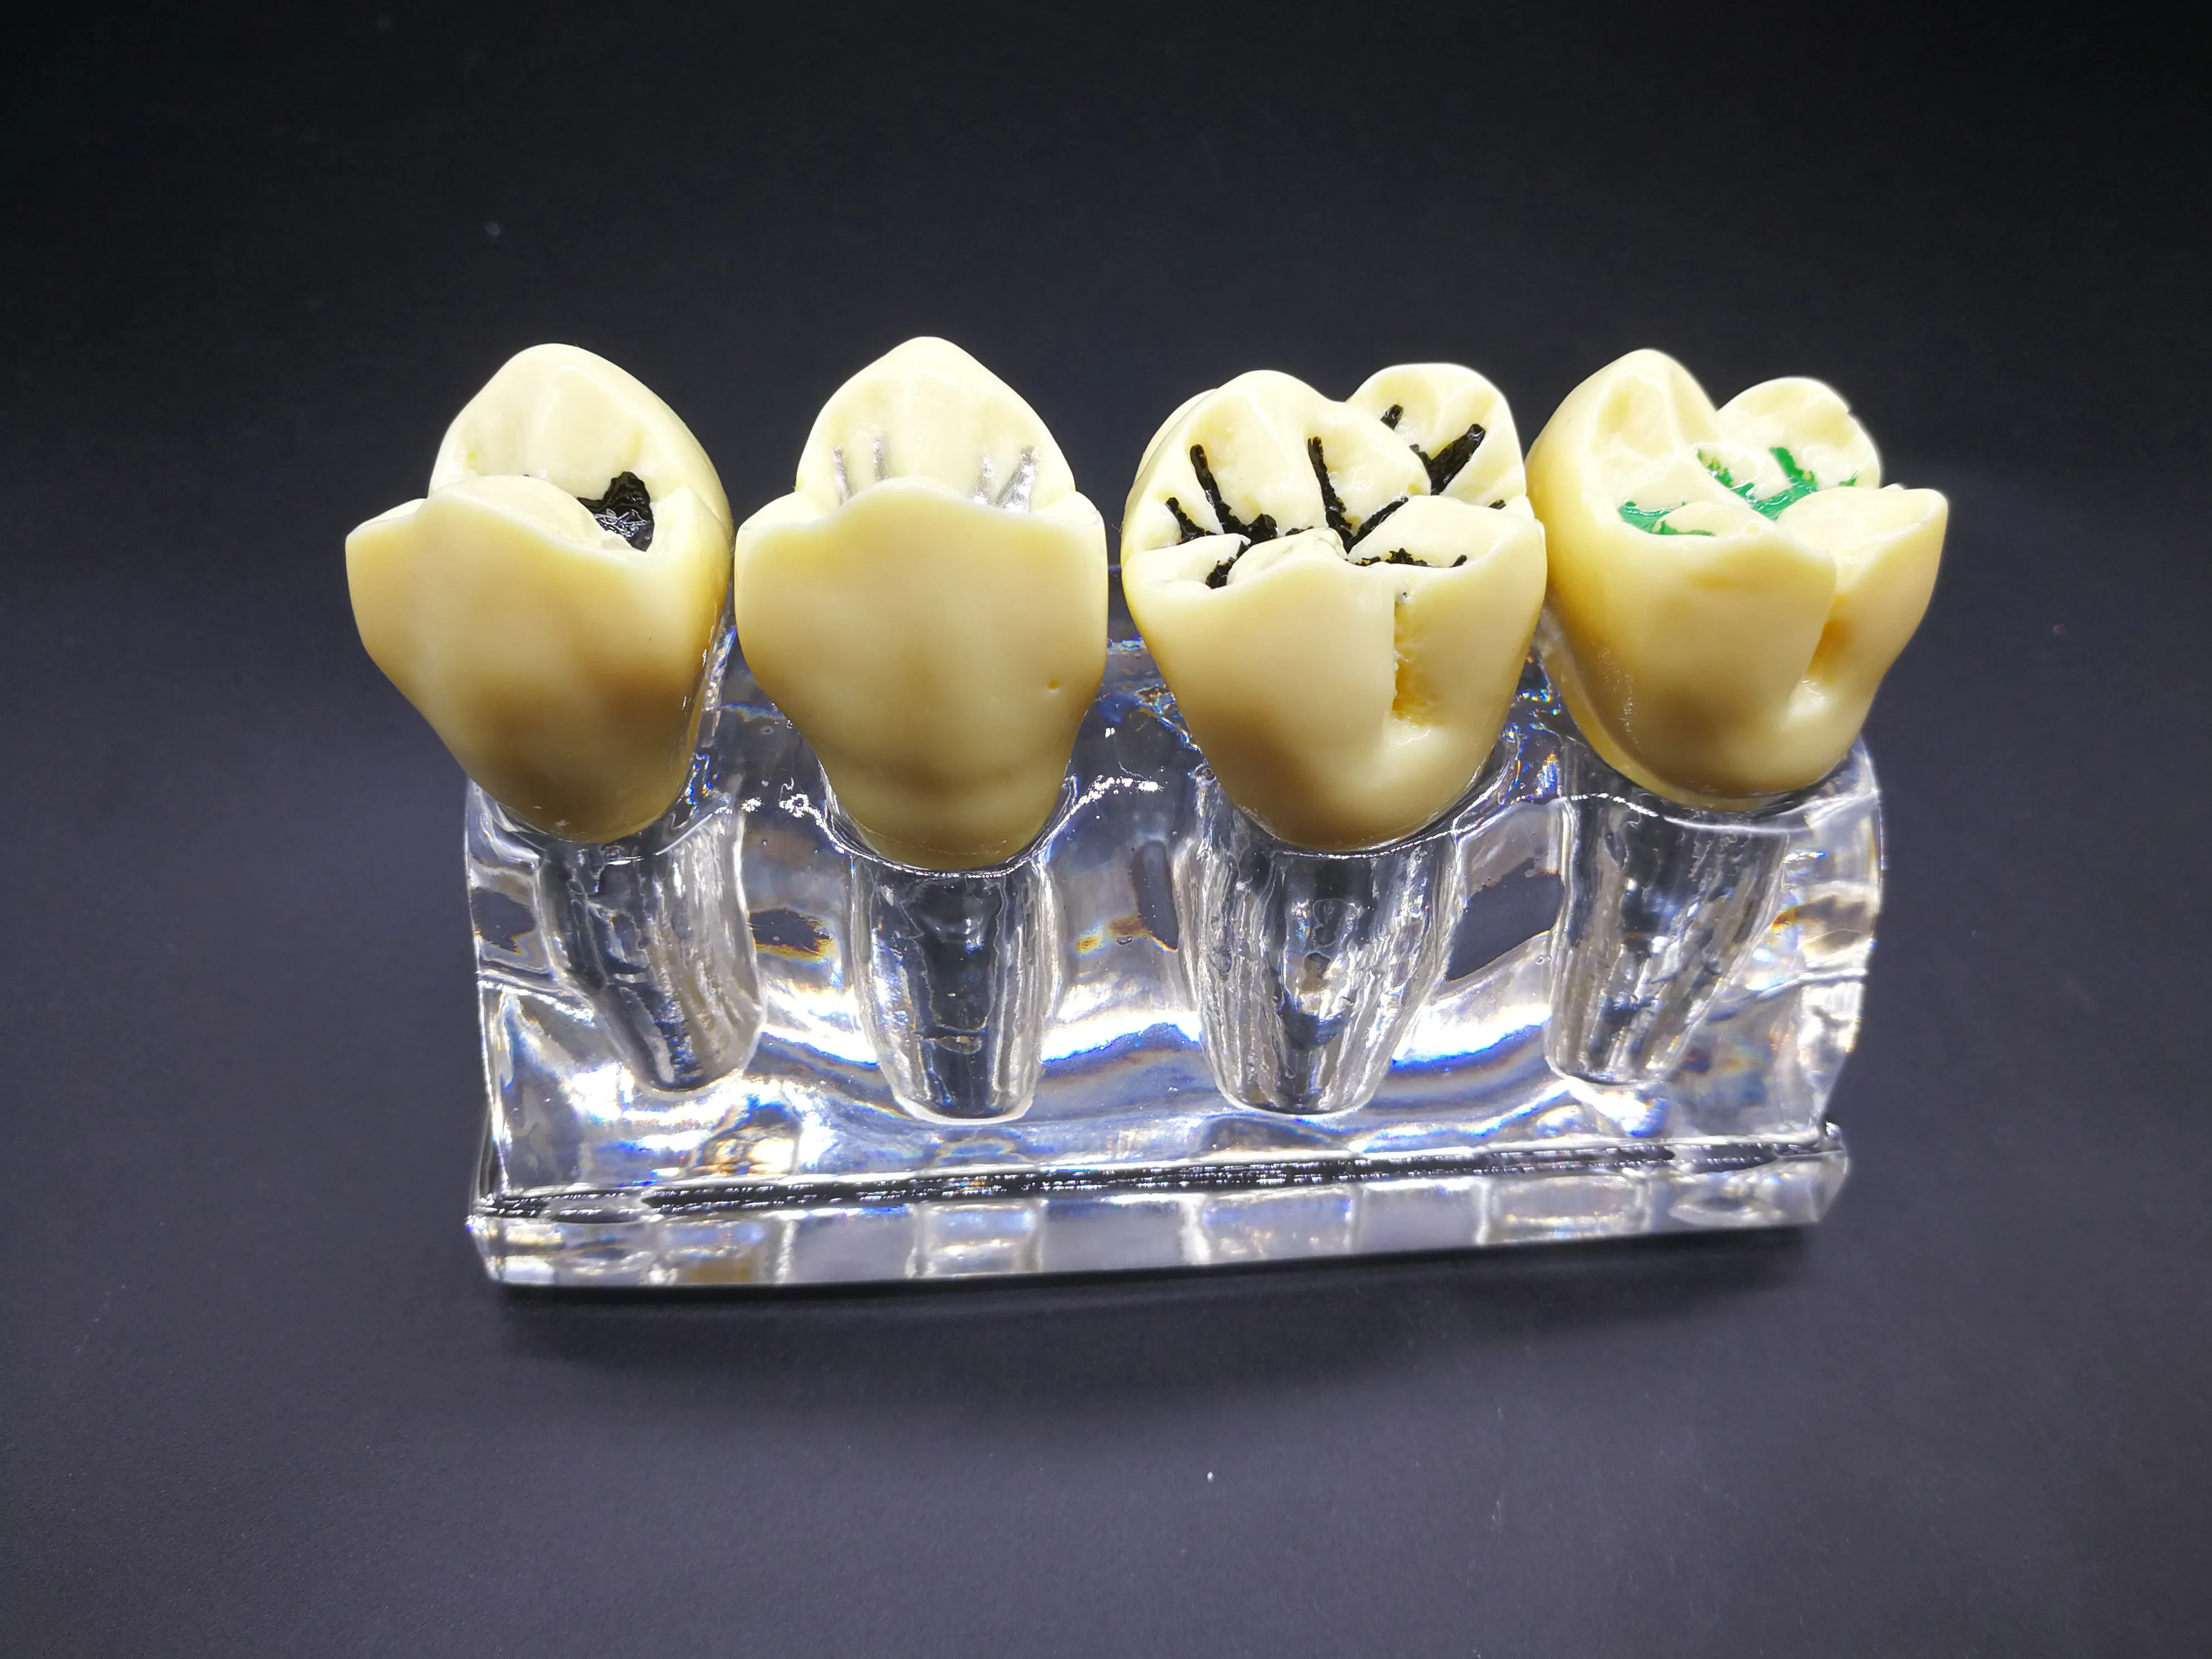 dentalimplant图片